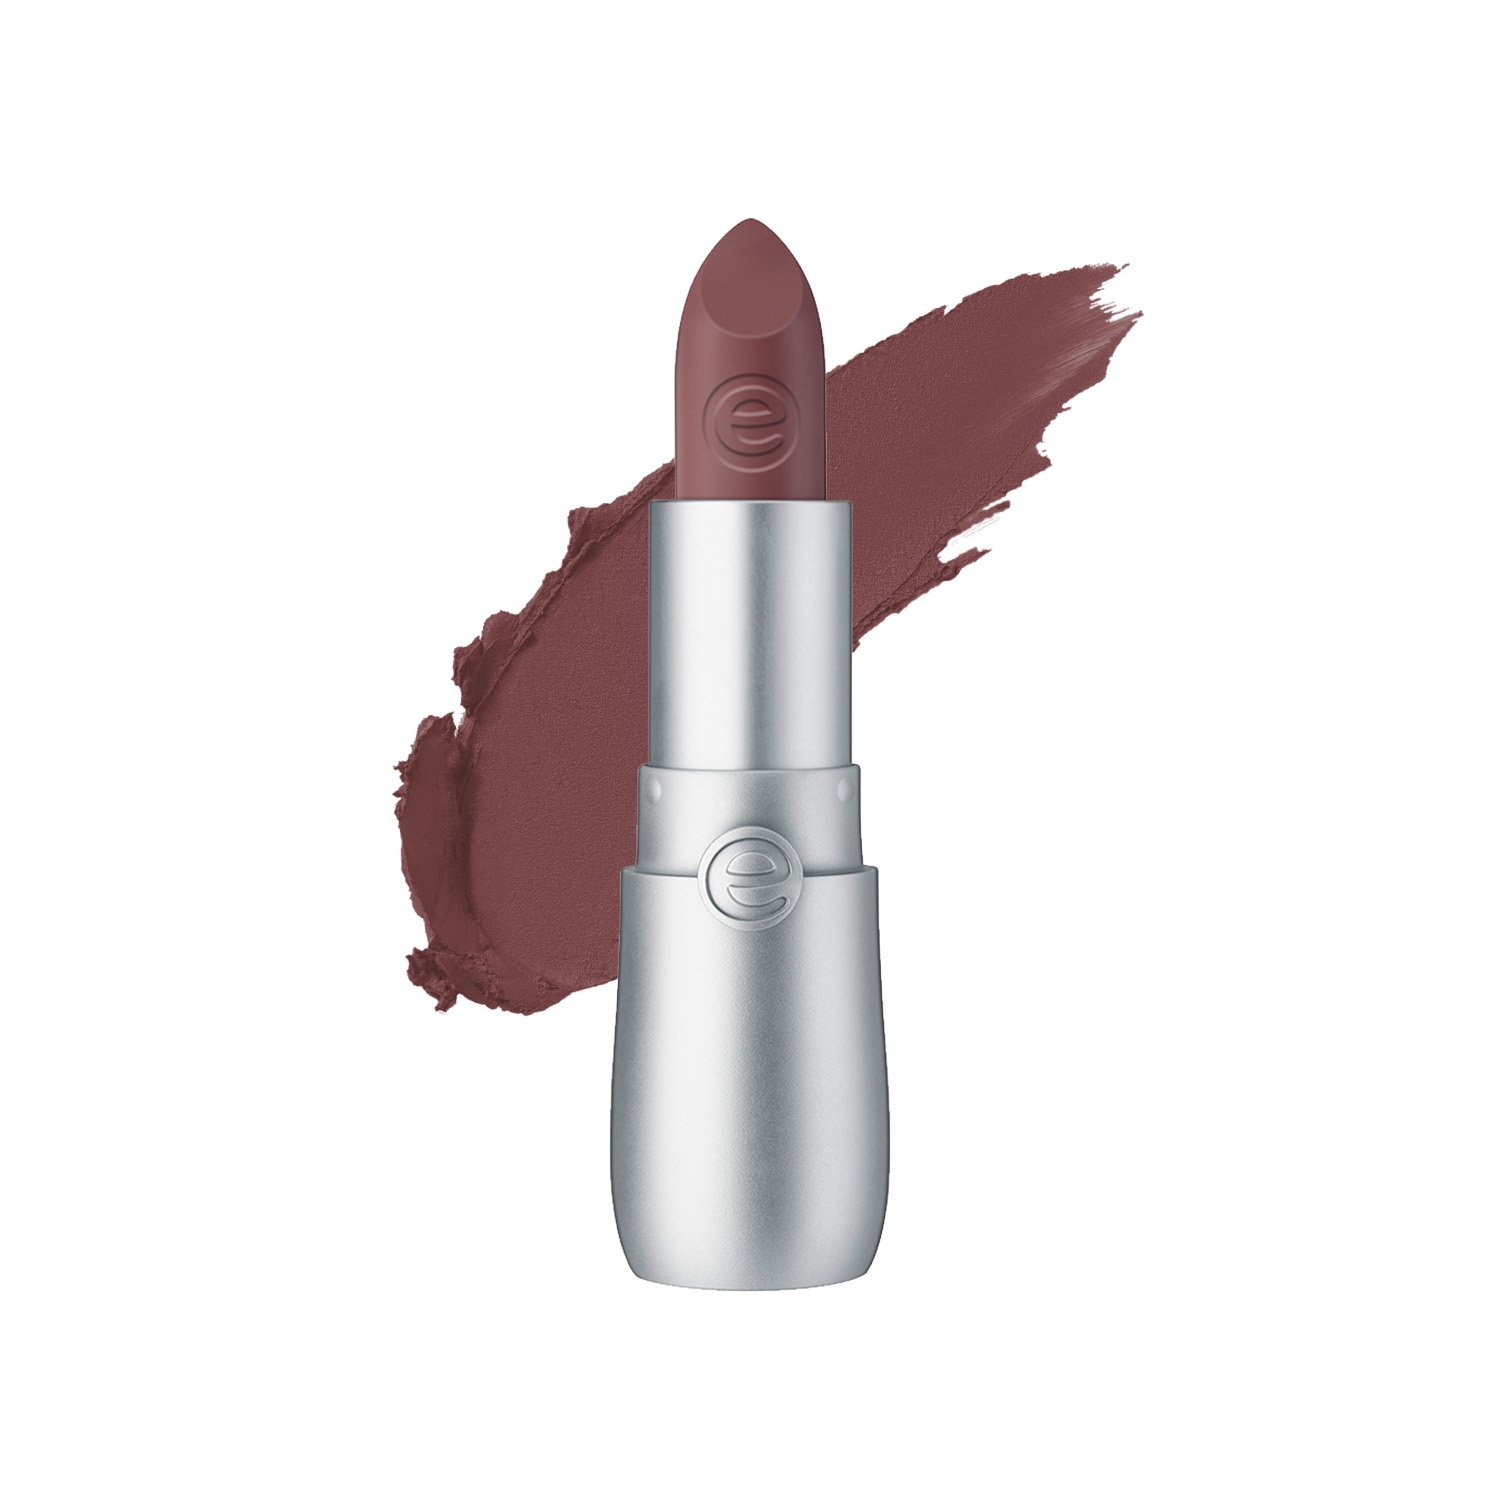 essence velvet matte lipstick 11 - เอสเซนส์เวลเว็ตแมตต์ลิปสติก11